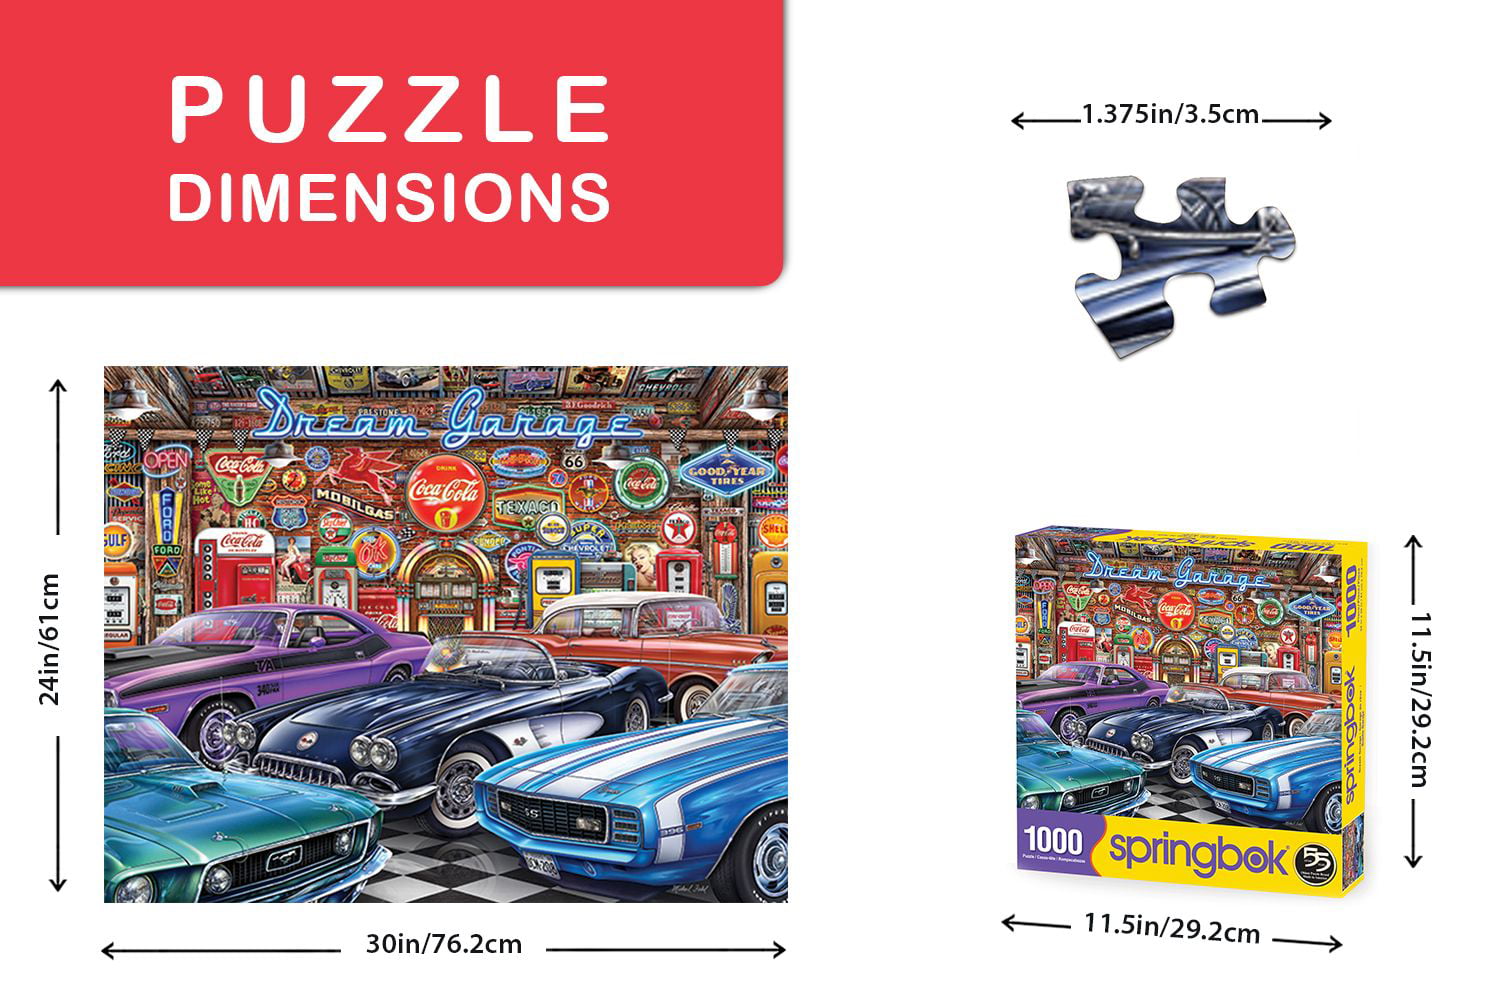 Springbok's 1000 Piece Jigsaw Puzzle Dream Garage